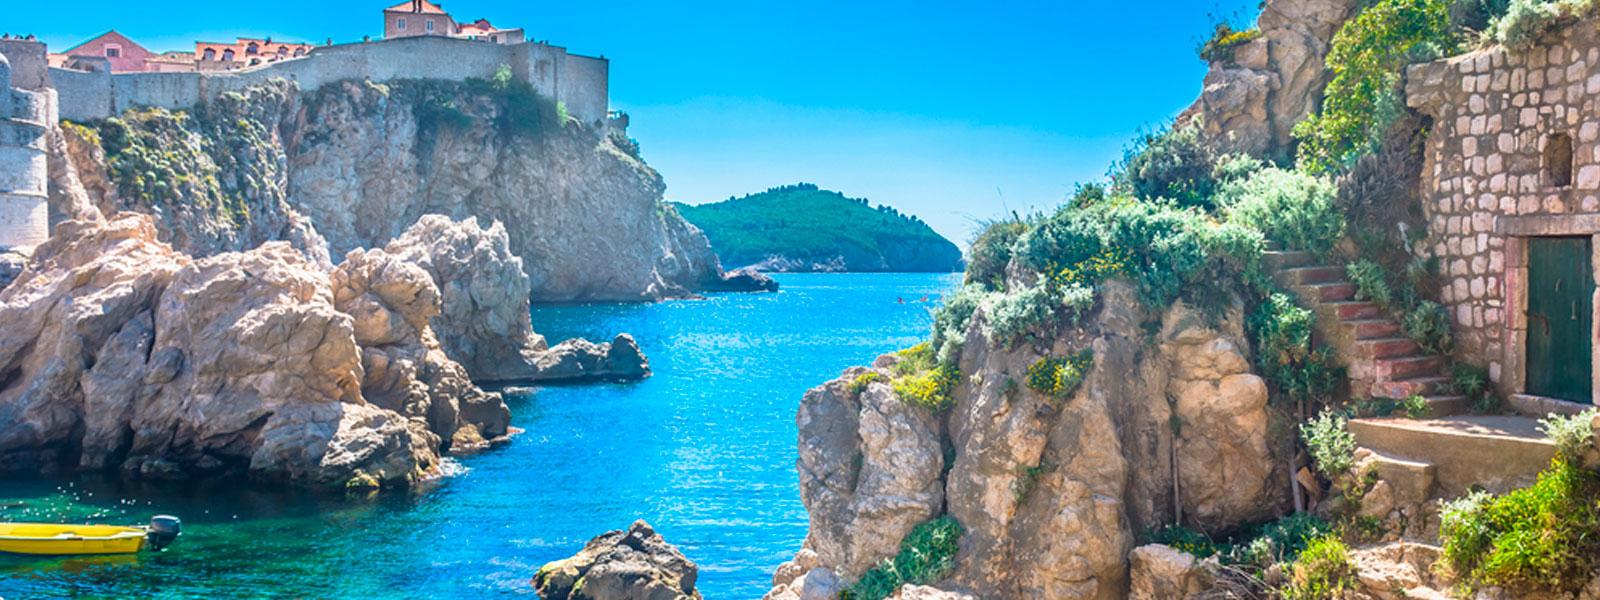 Blue sea - Croatia honeymoon